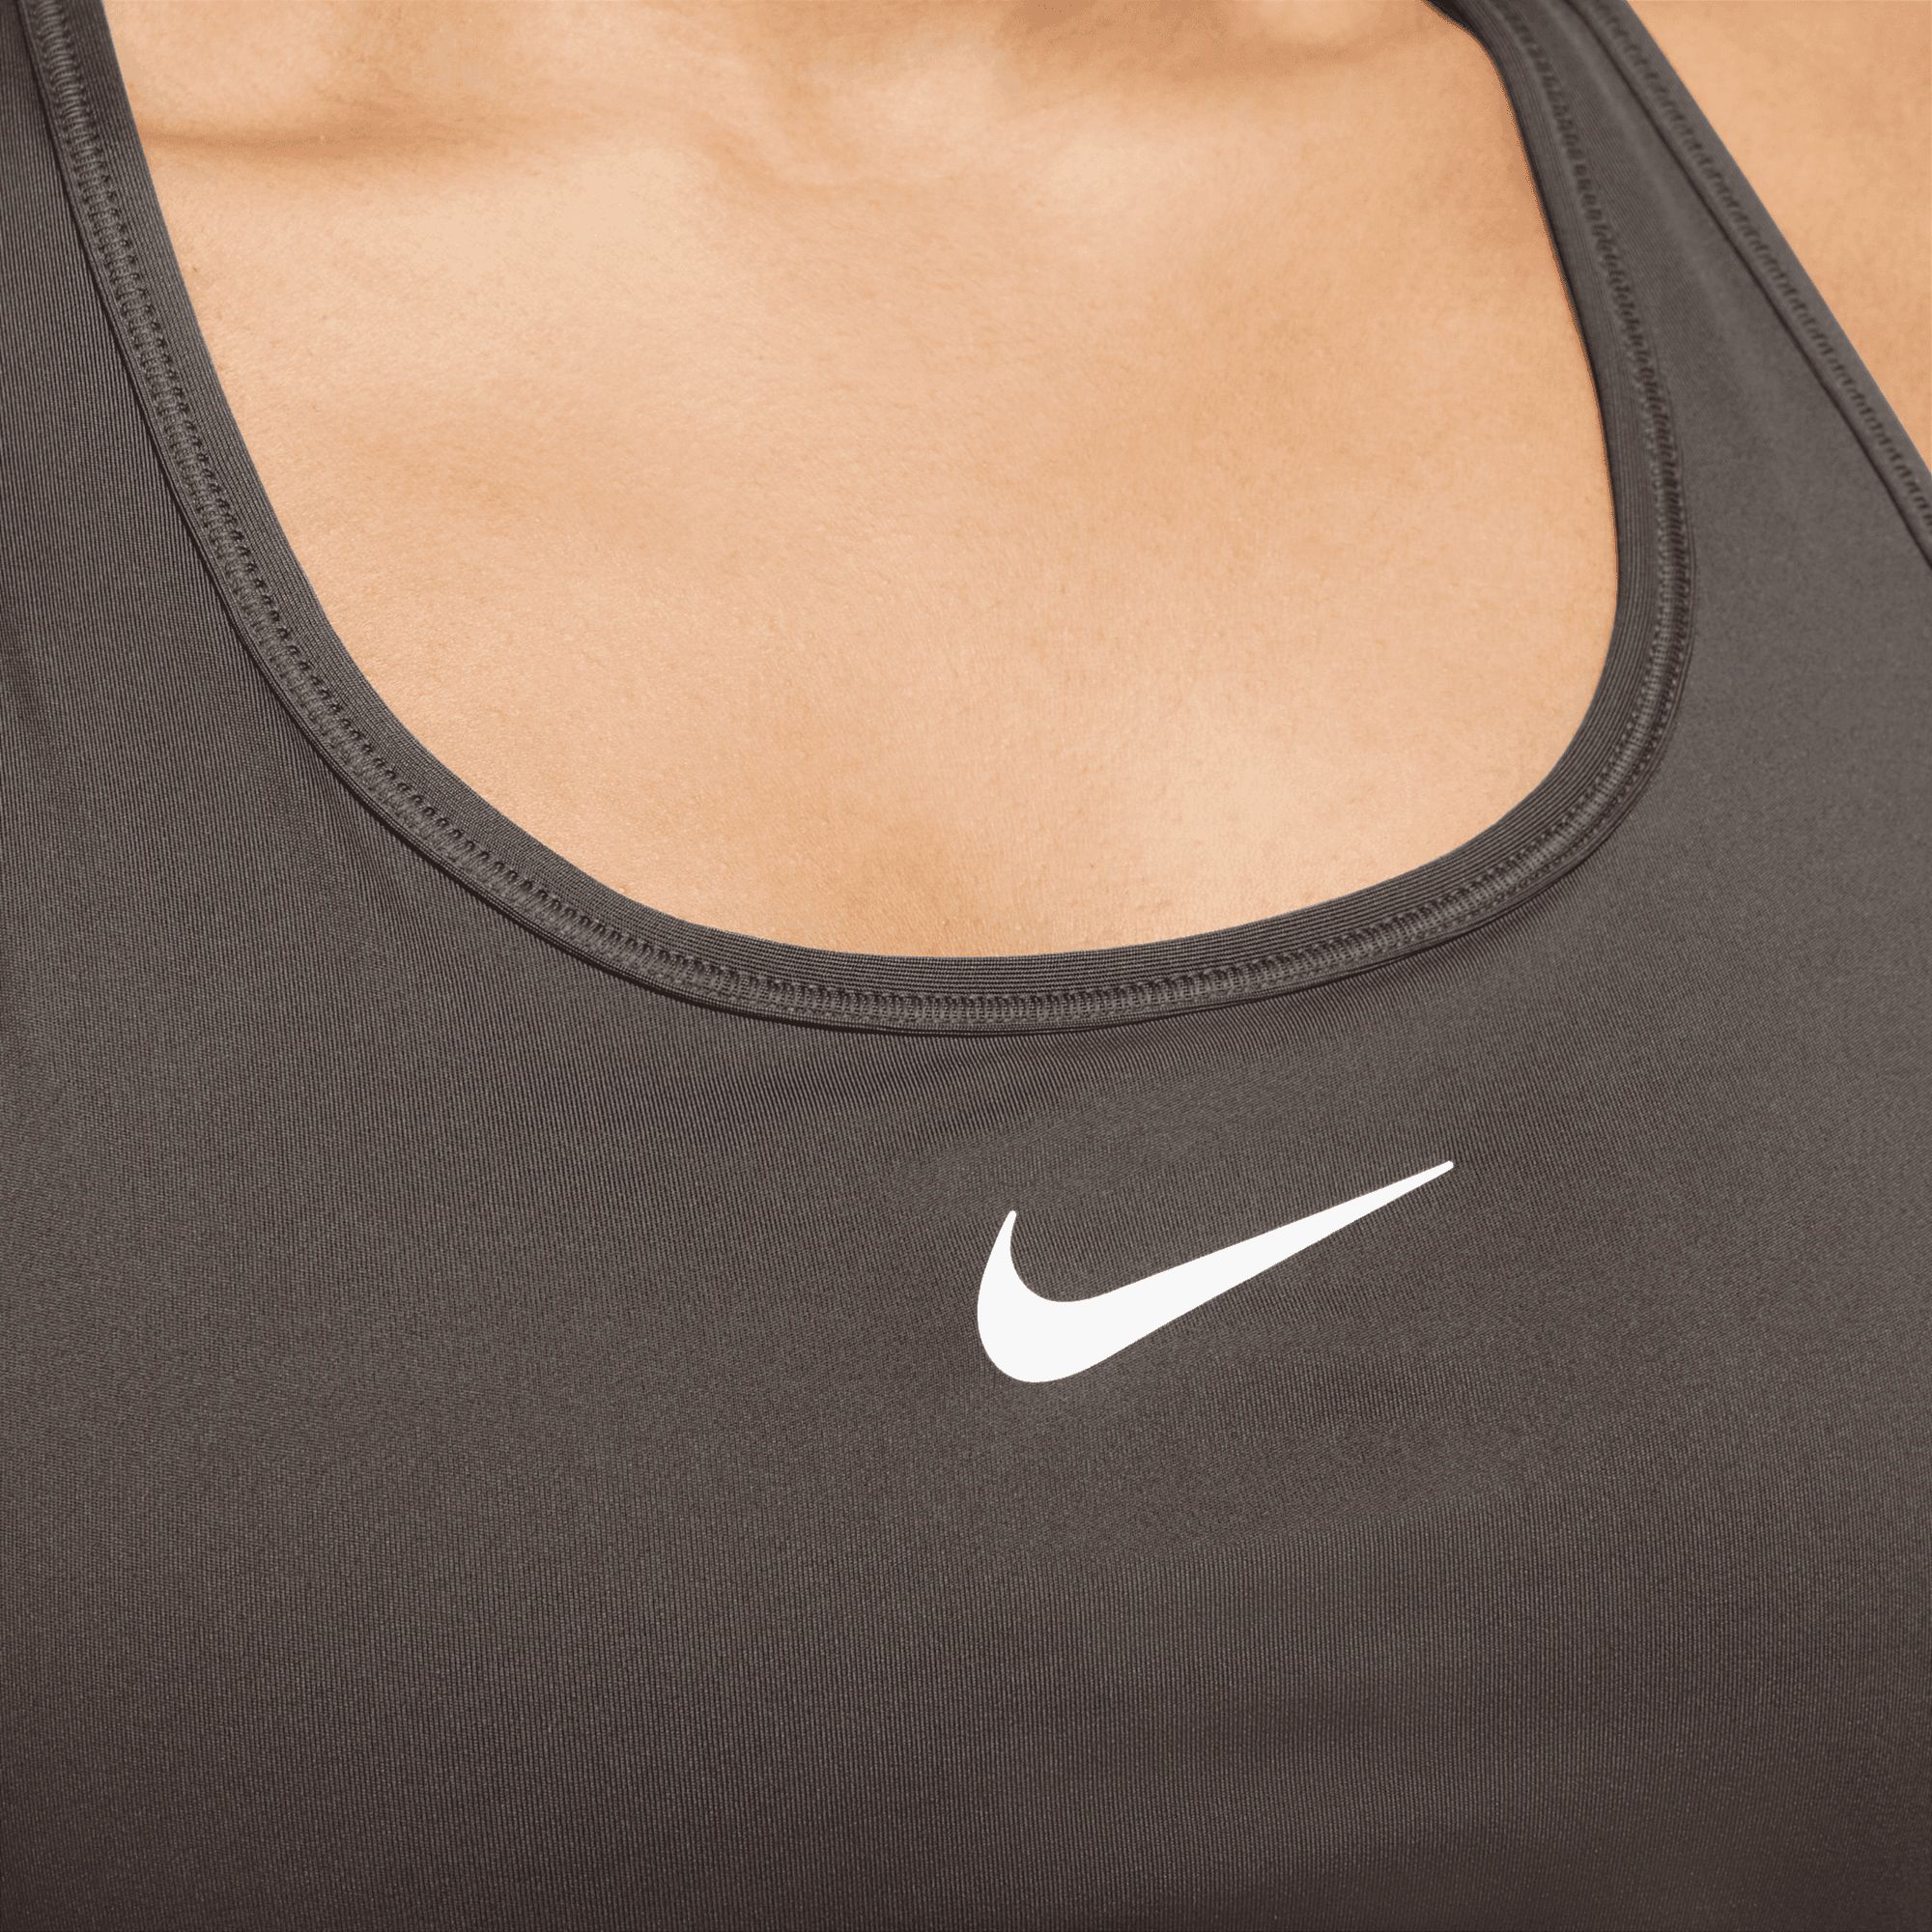 Dick's Sporting Goods Nike Women's Swoosh Medium Support Padded Sports Bra